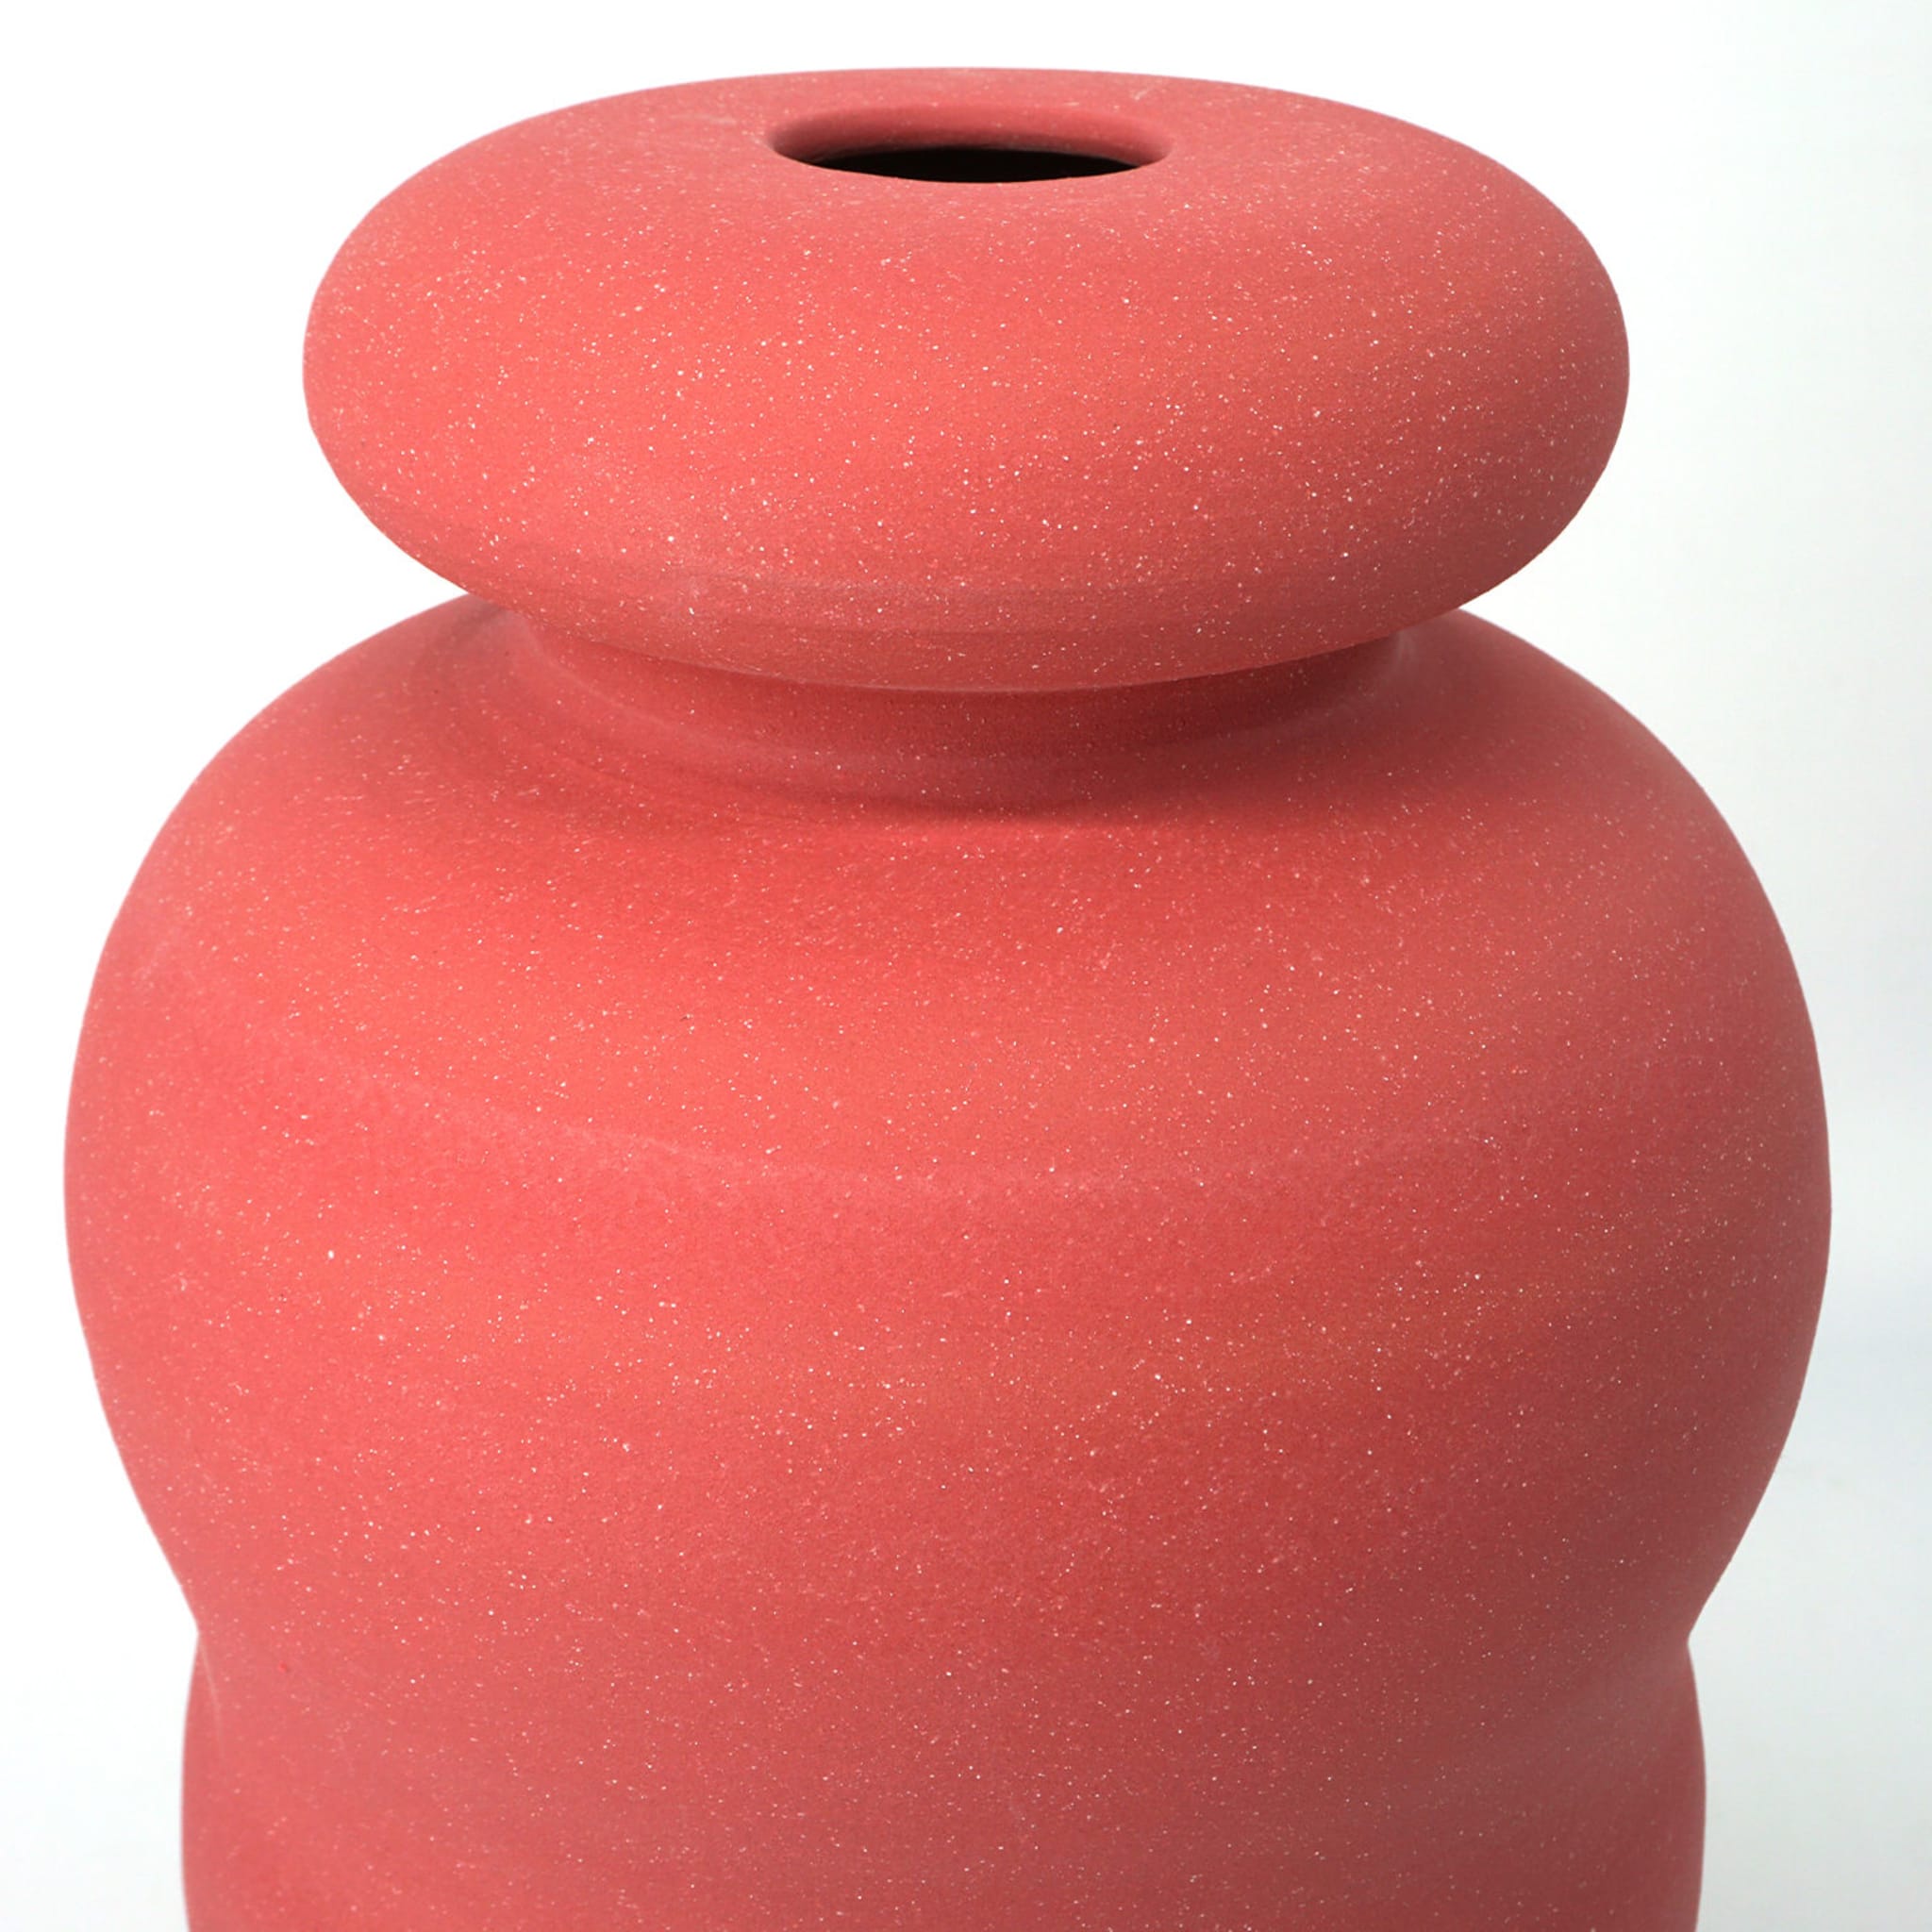 Crisalide Red Vase #7 - Alternative view 1